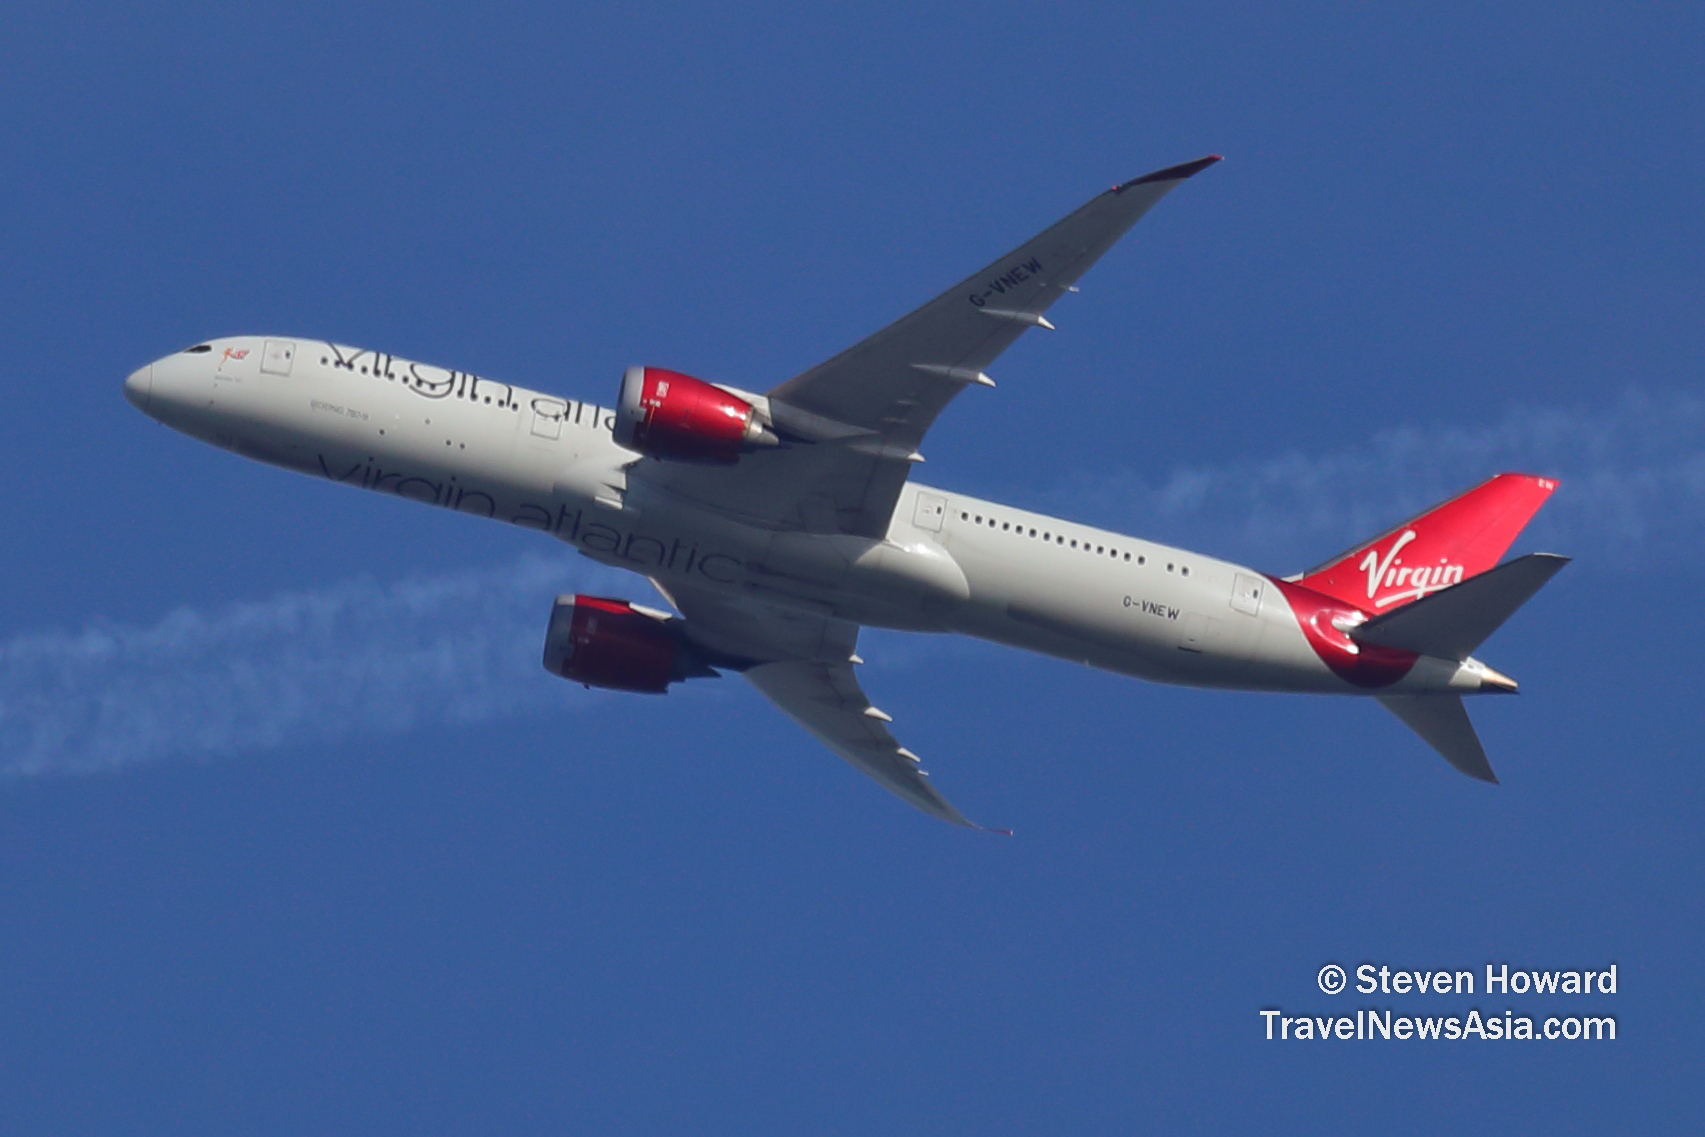 Virgin Atlantic Boeing 787-9 reg: G-VNEW. Picture by Steven Howard of TravelNewsAsia.com Click to enlarge.